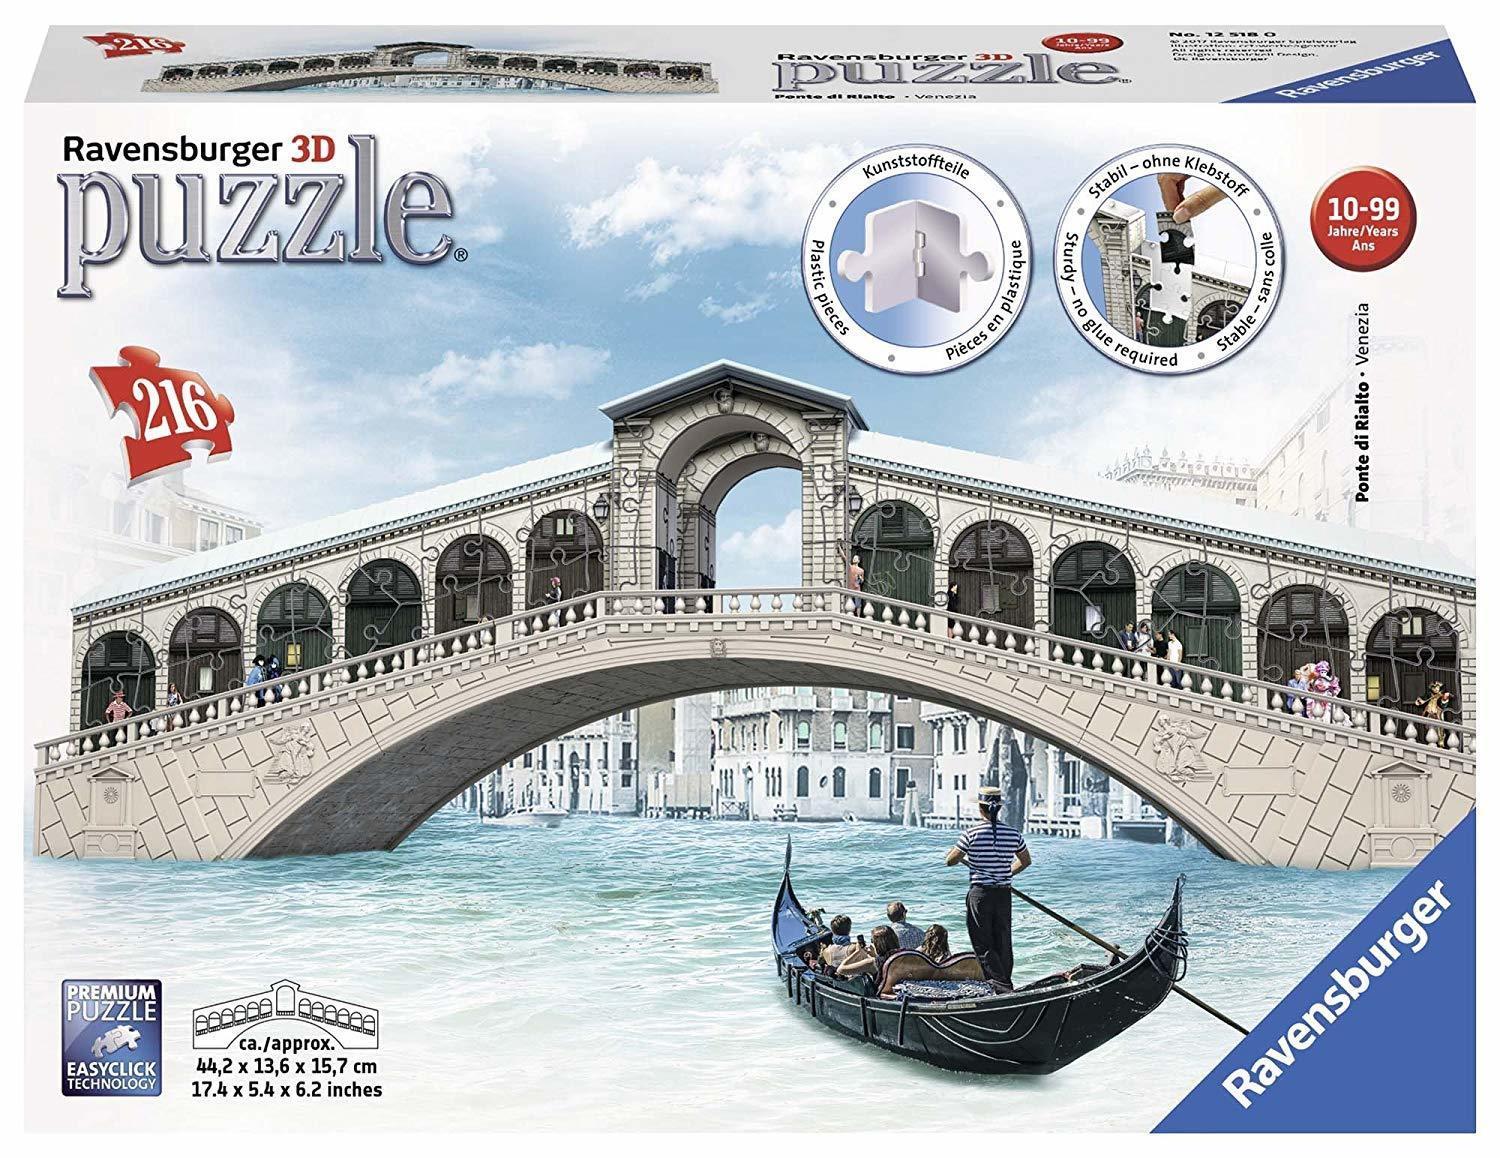 Ravensburger 3D Puzzle 216pc - Venice's Rialto Bridge